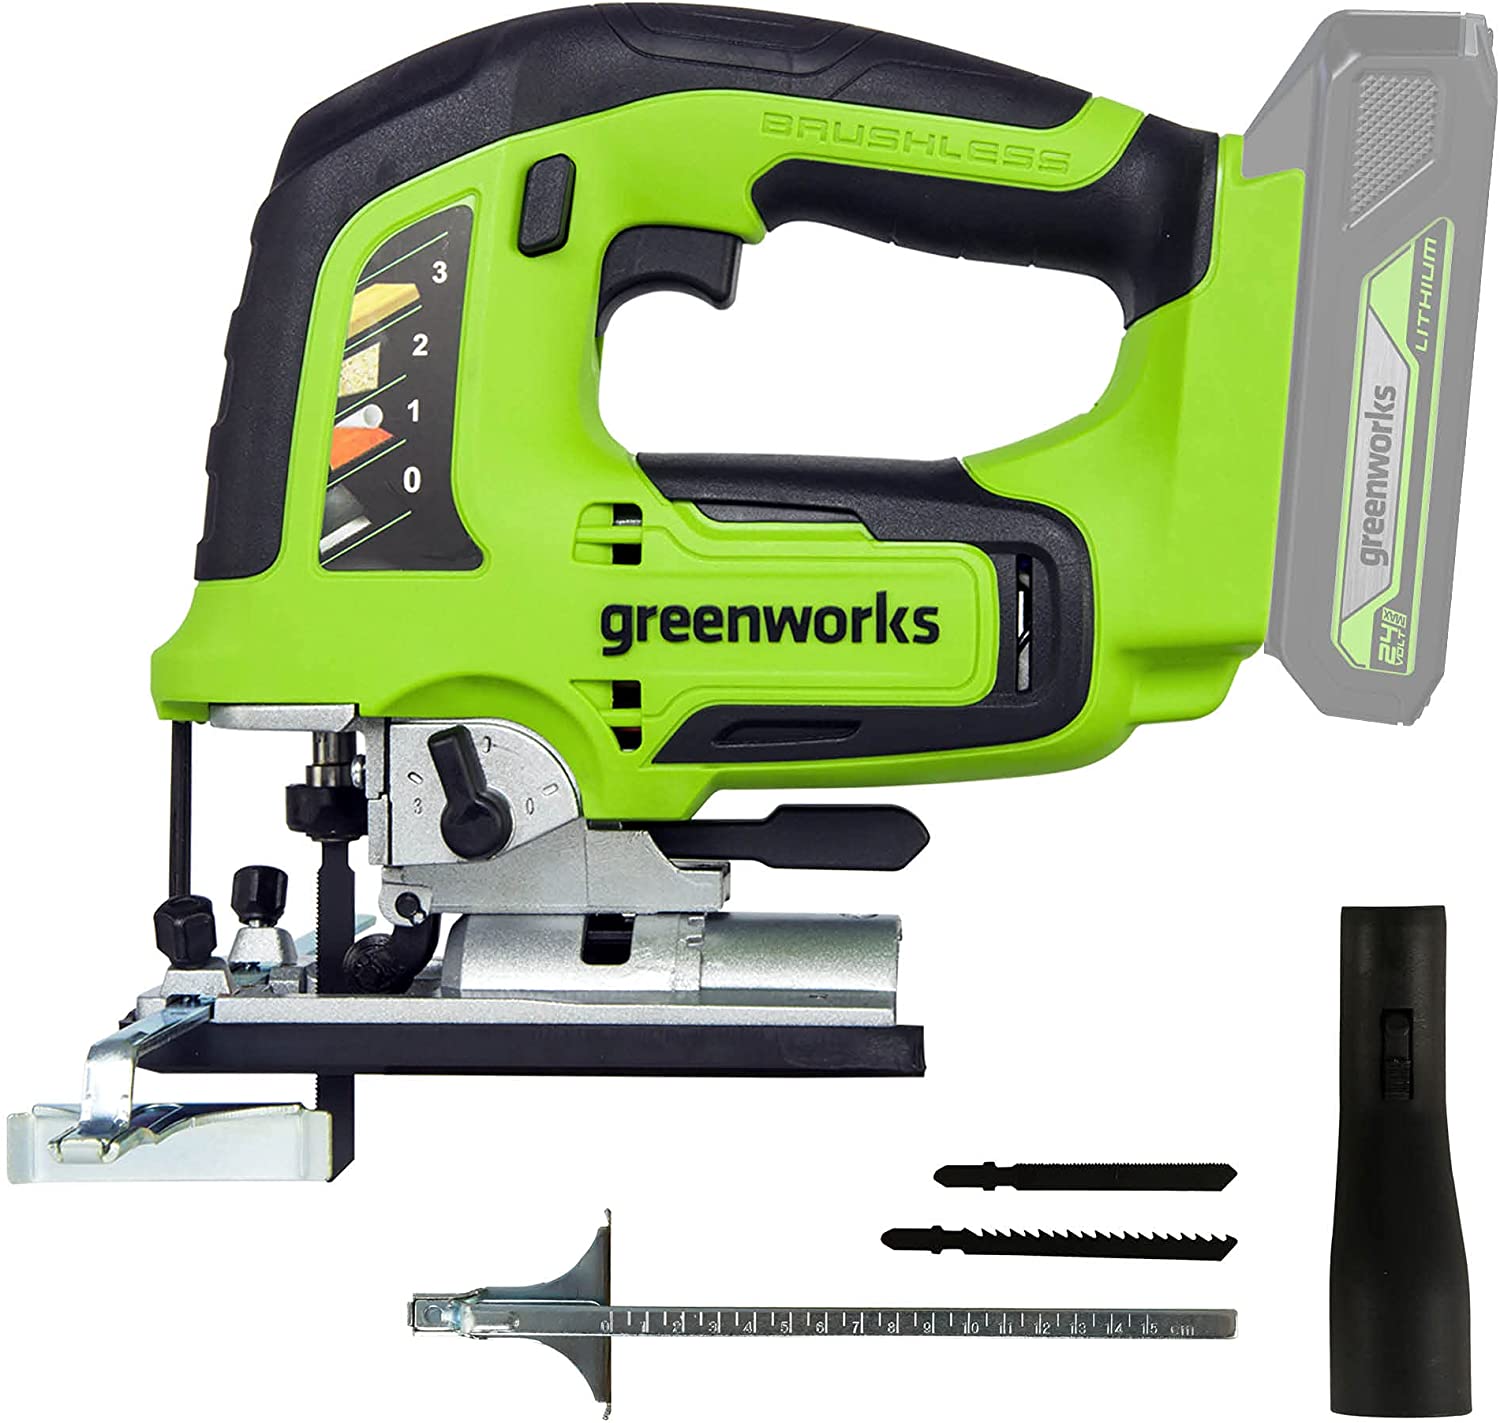 Greenworks 24V Jigsaw - Tool Only $48.70